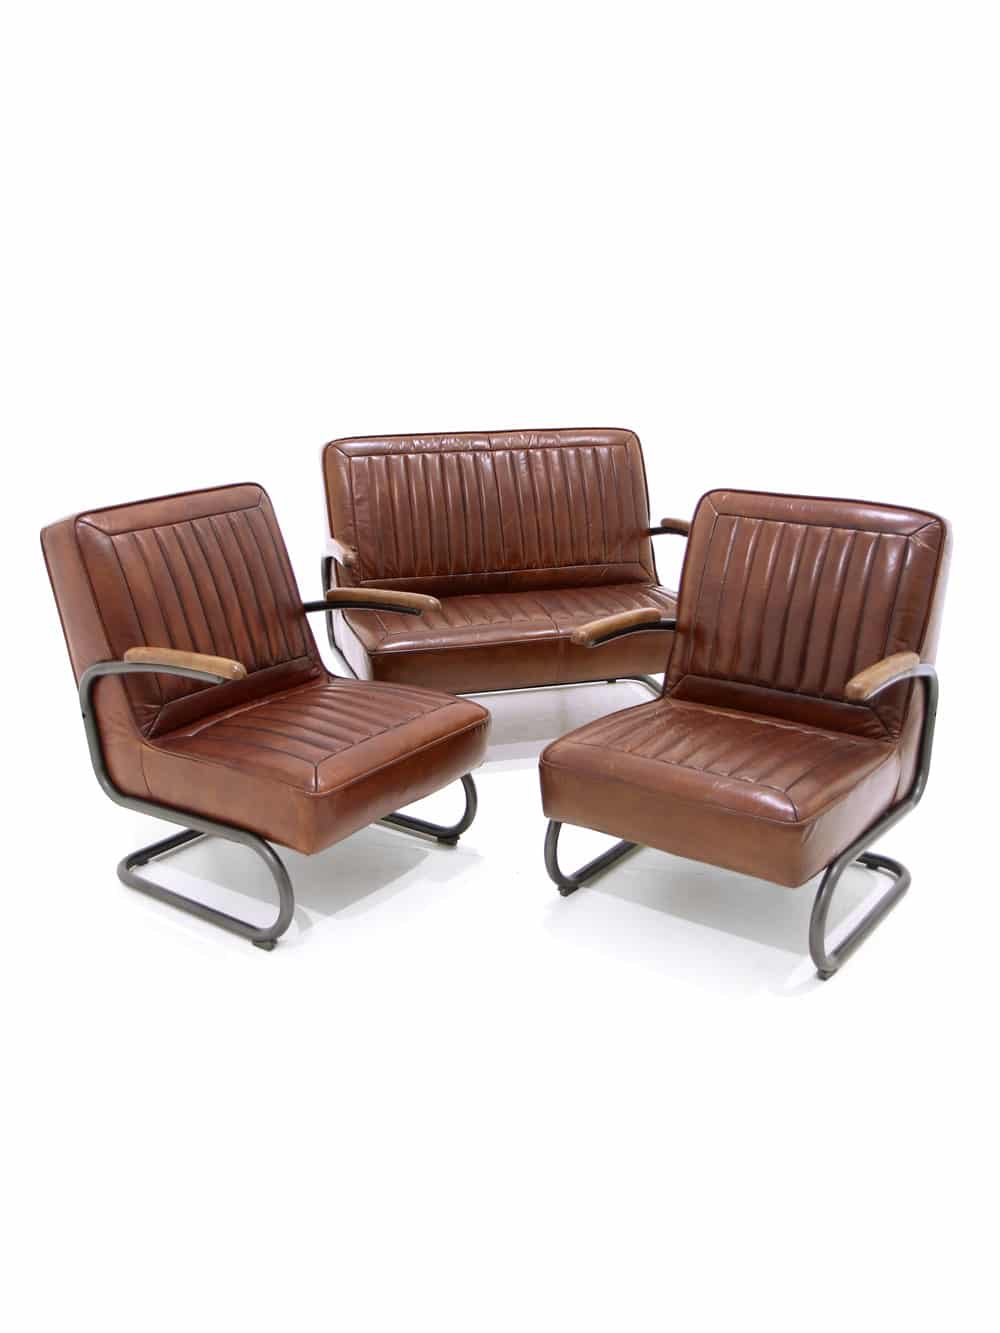 Vintage Style Pullman Leather Sofa